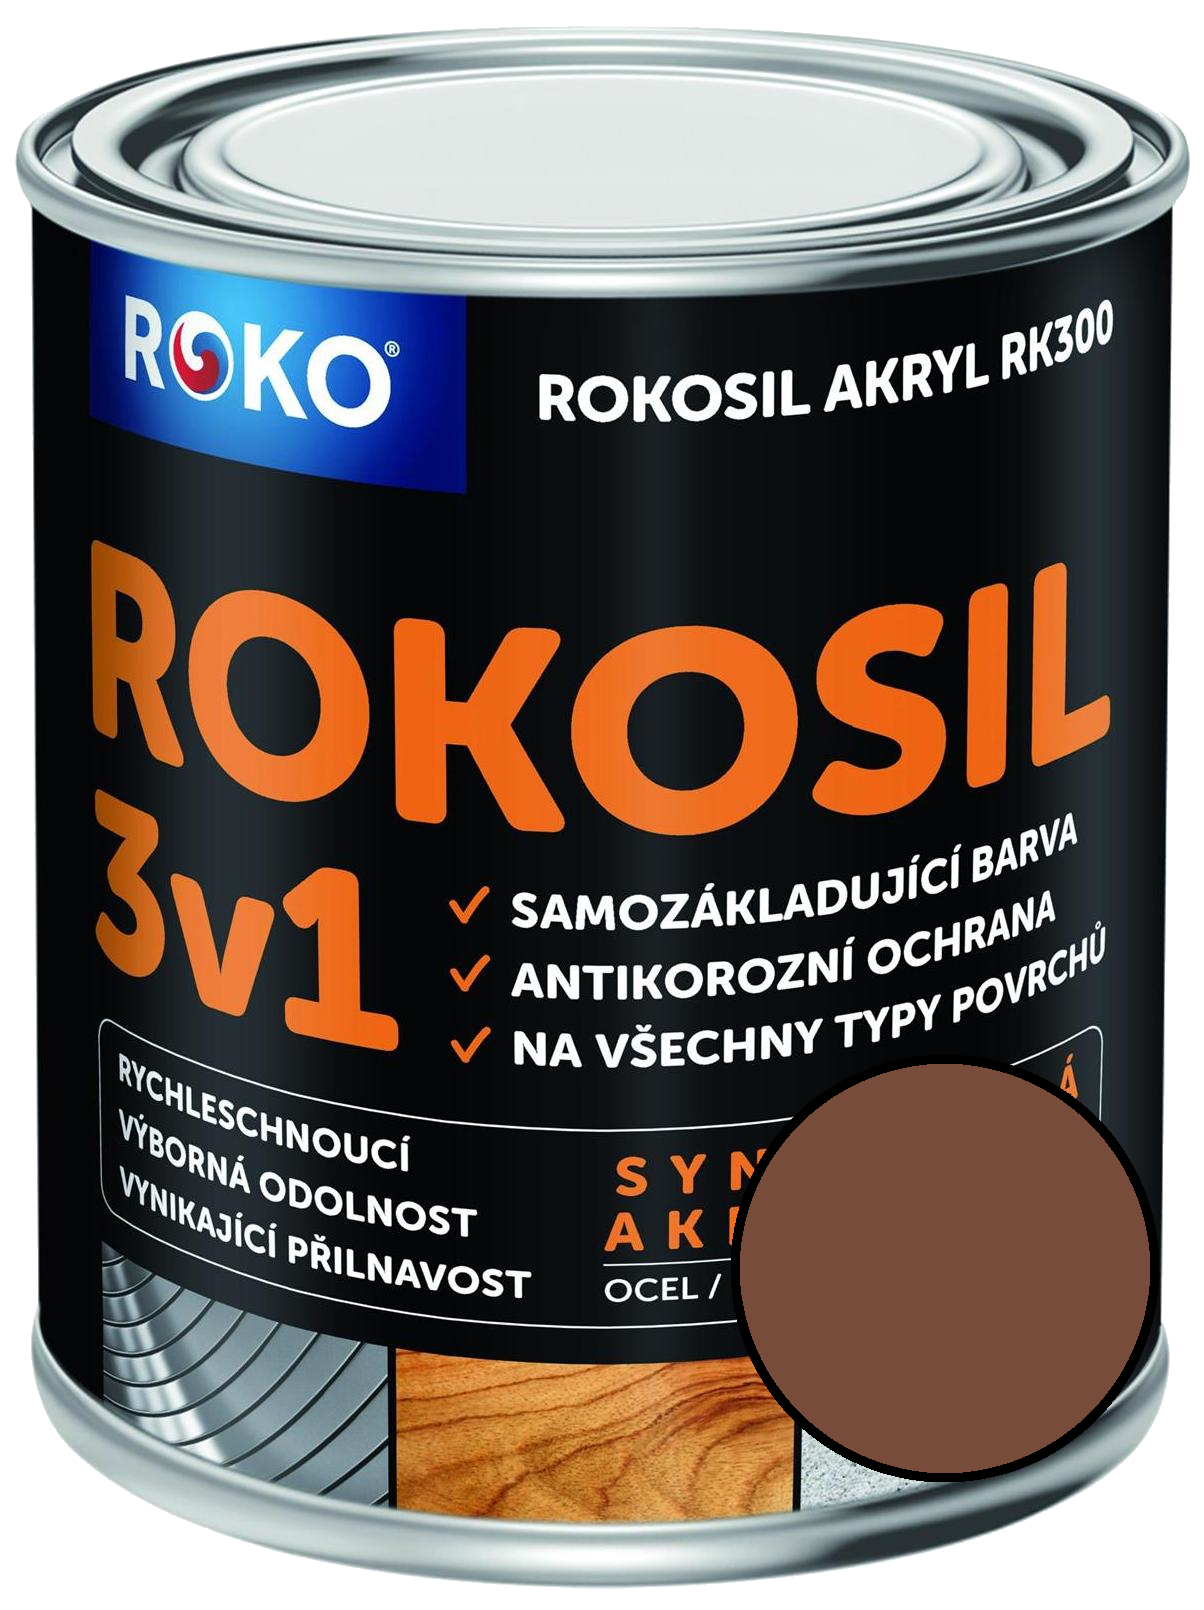 Barva samozákladující Rokosil akryl 3v1 RK 300 2320 hnedá světlá